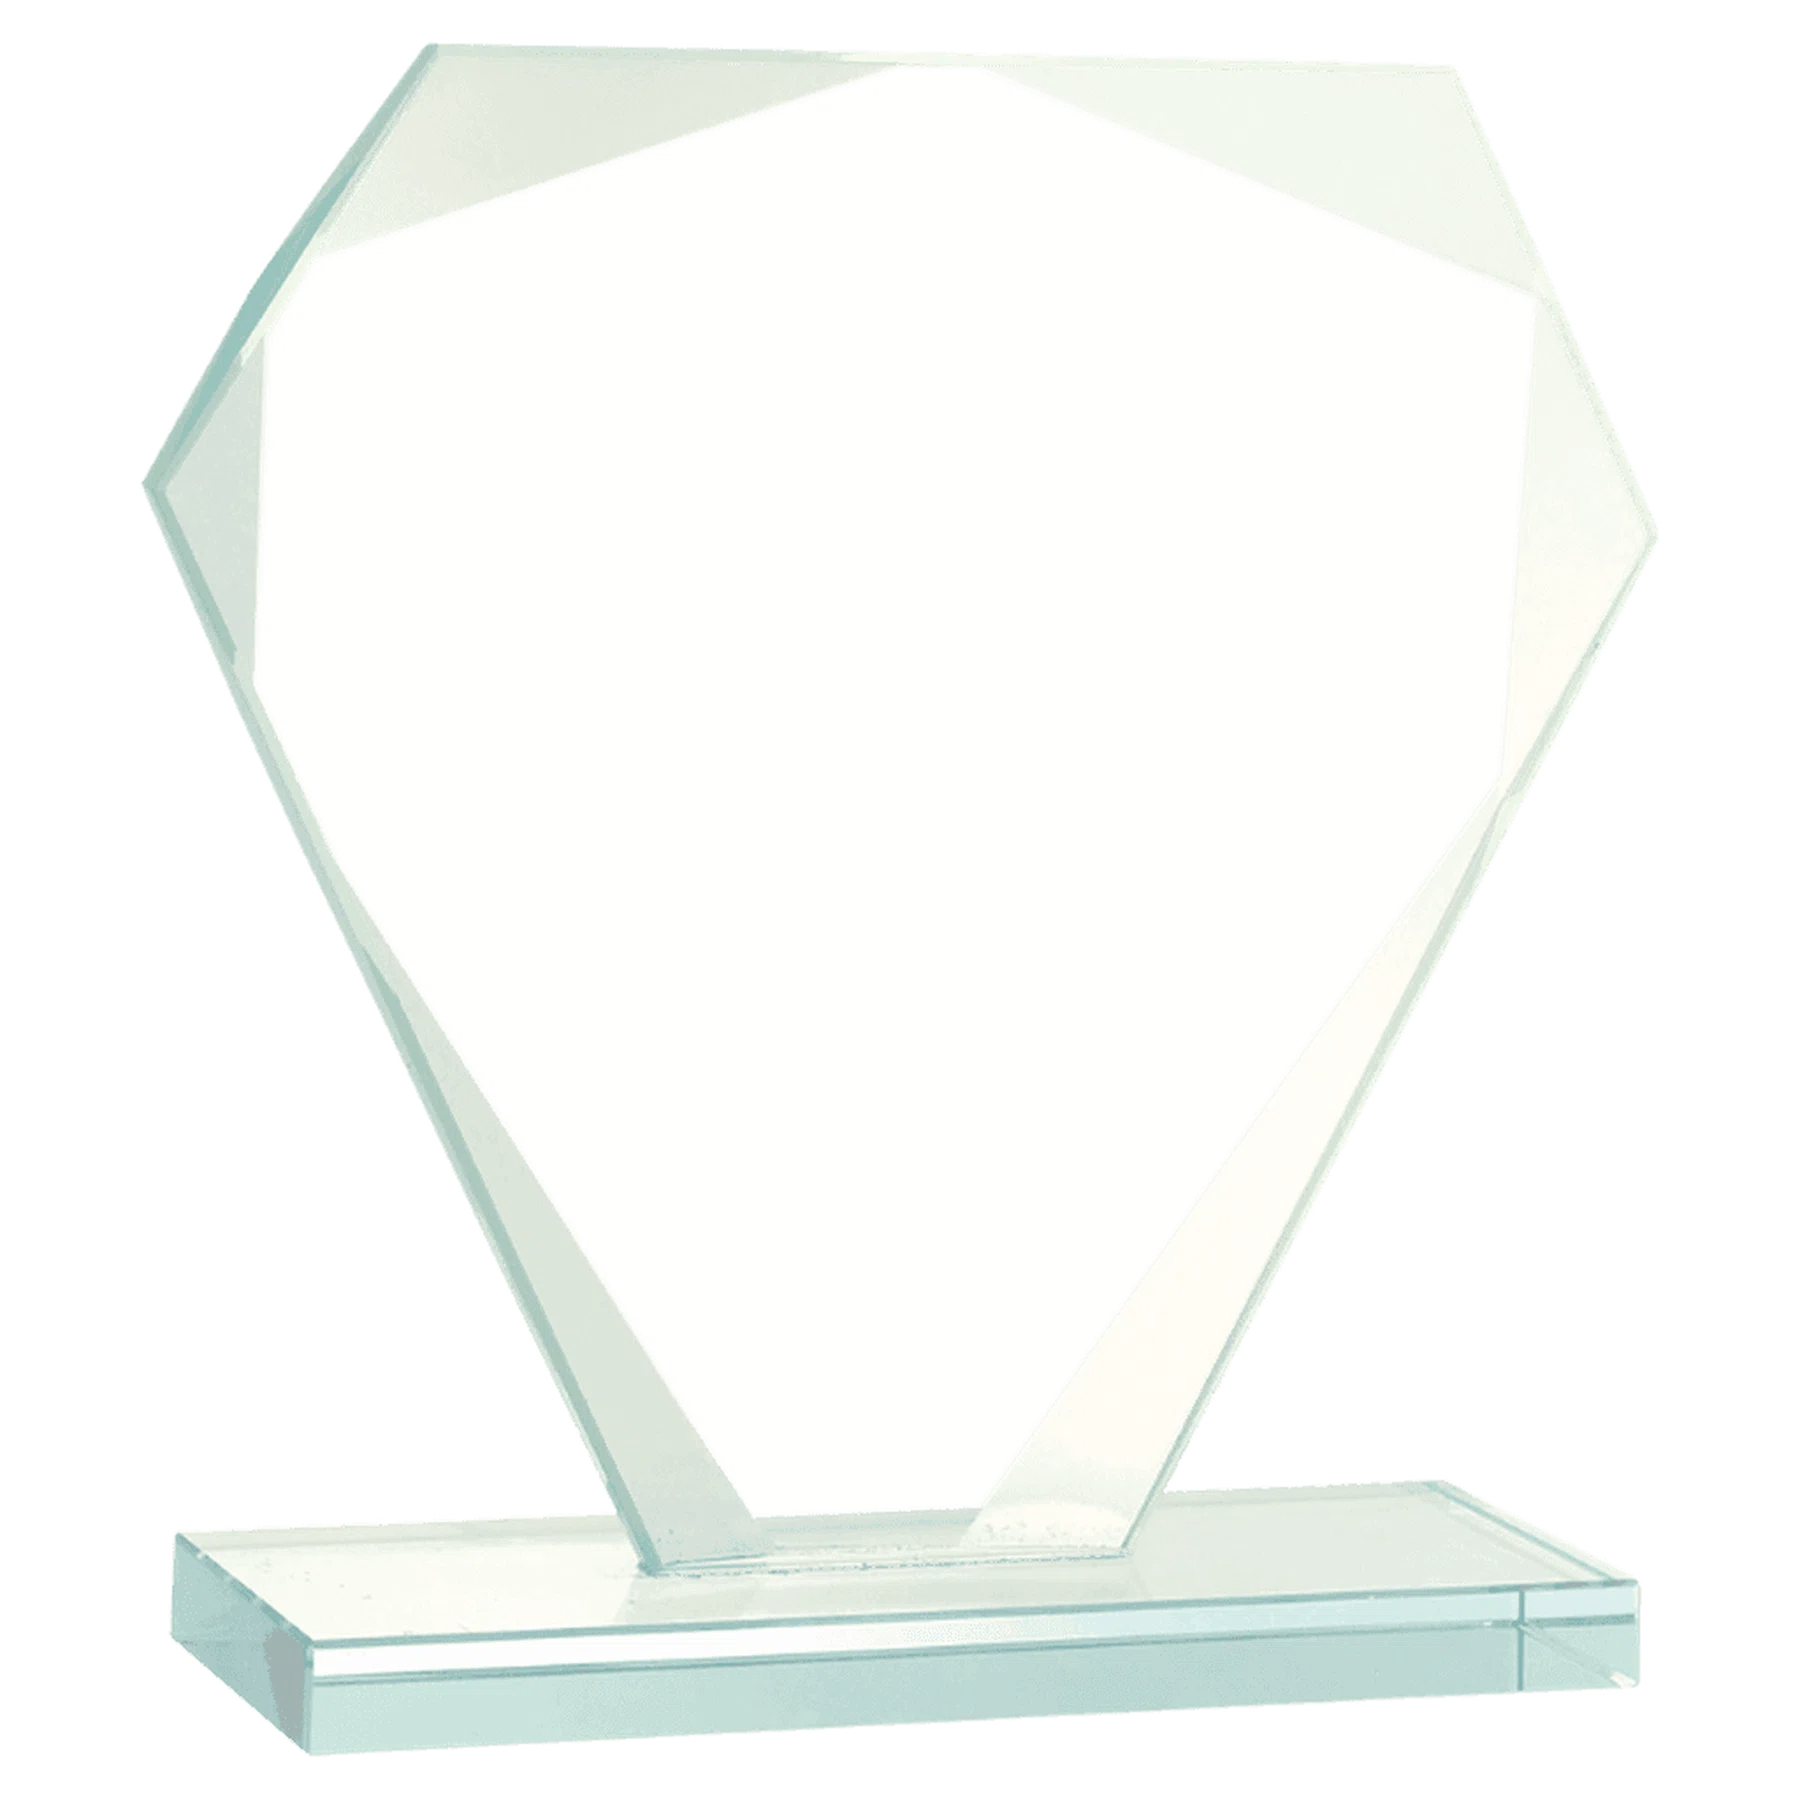 Cut Diamond Jade Glass Award